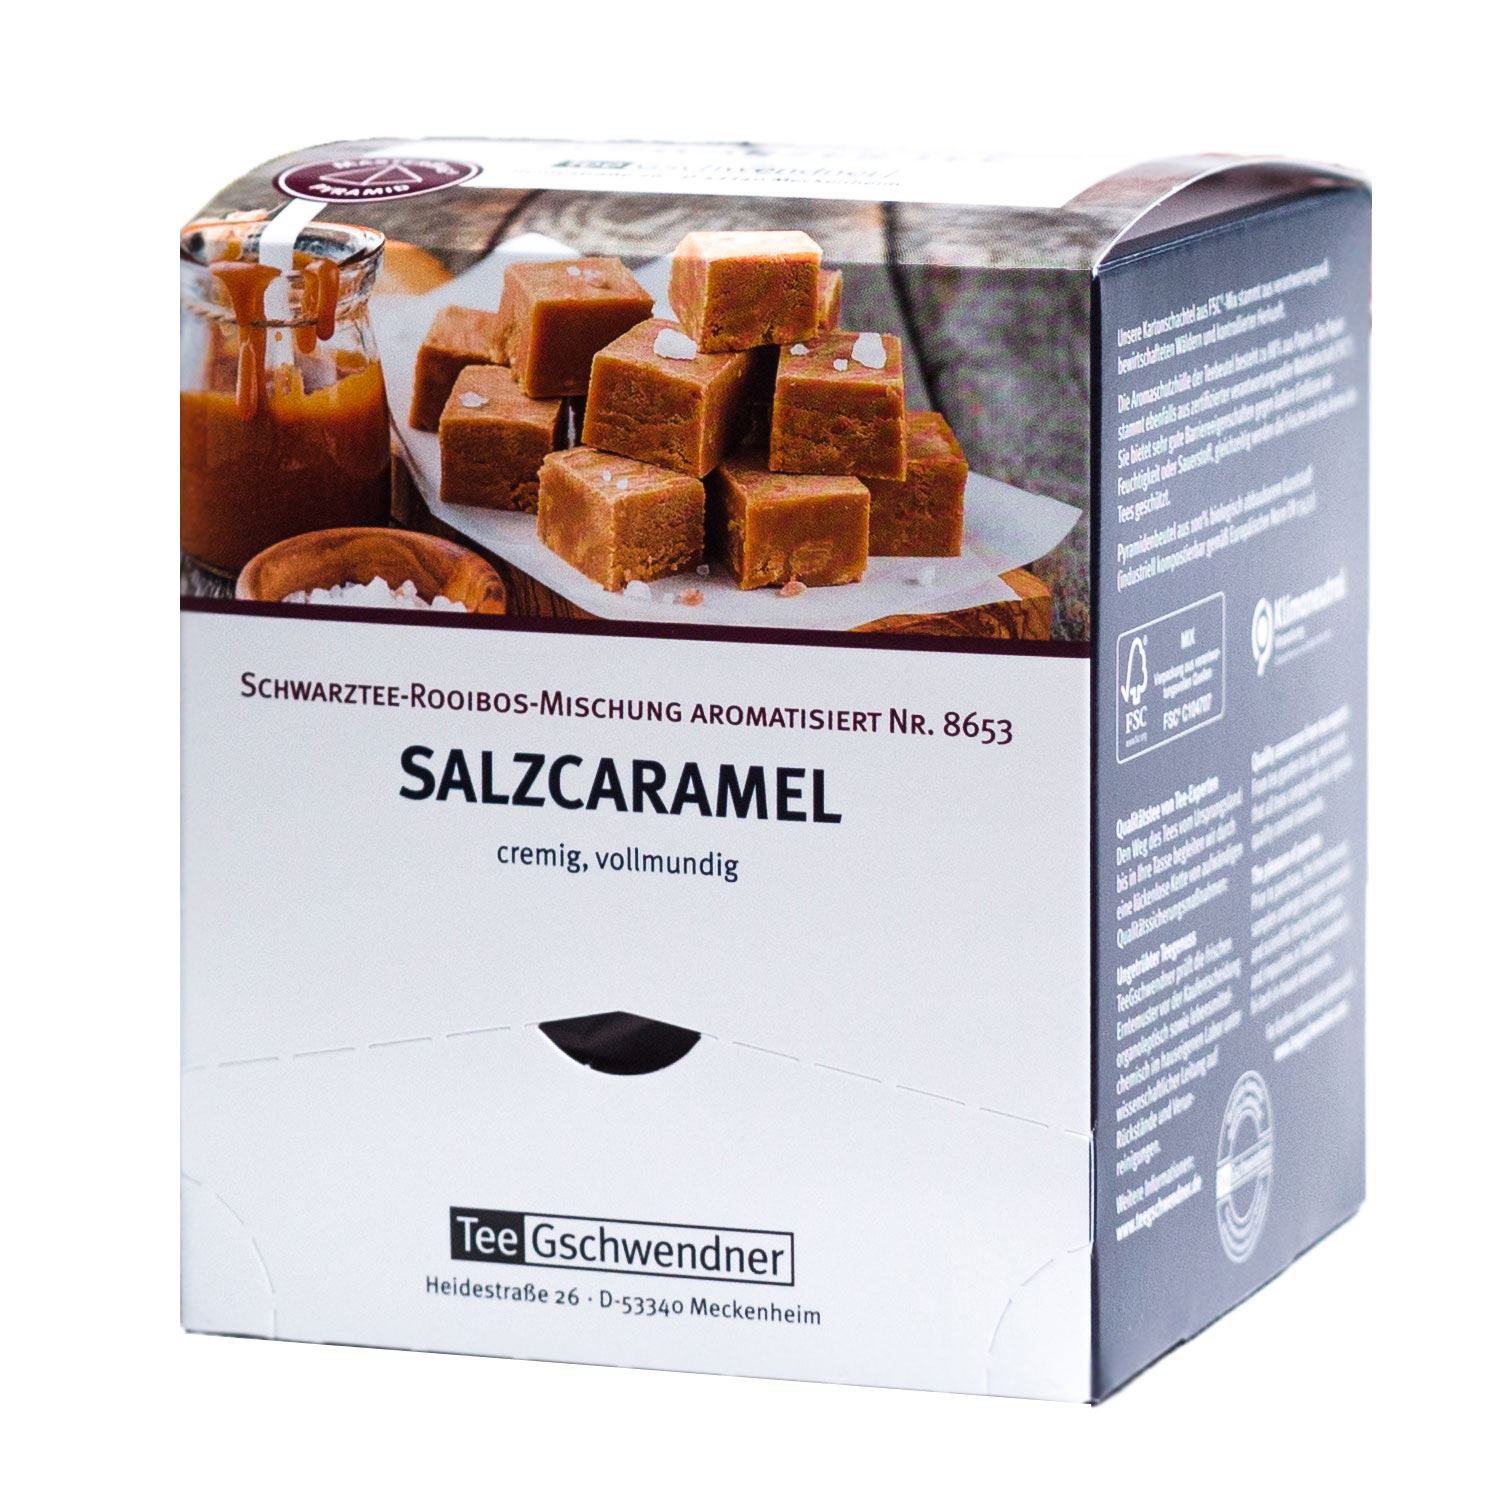 Salzcaramel (MasterBag Glas Pyramid)